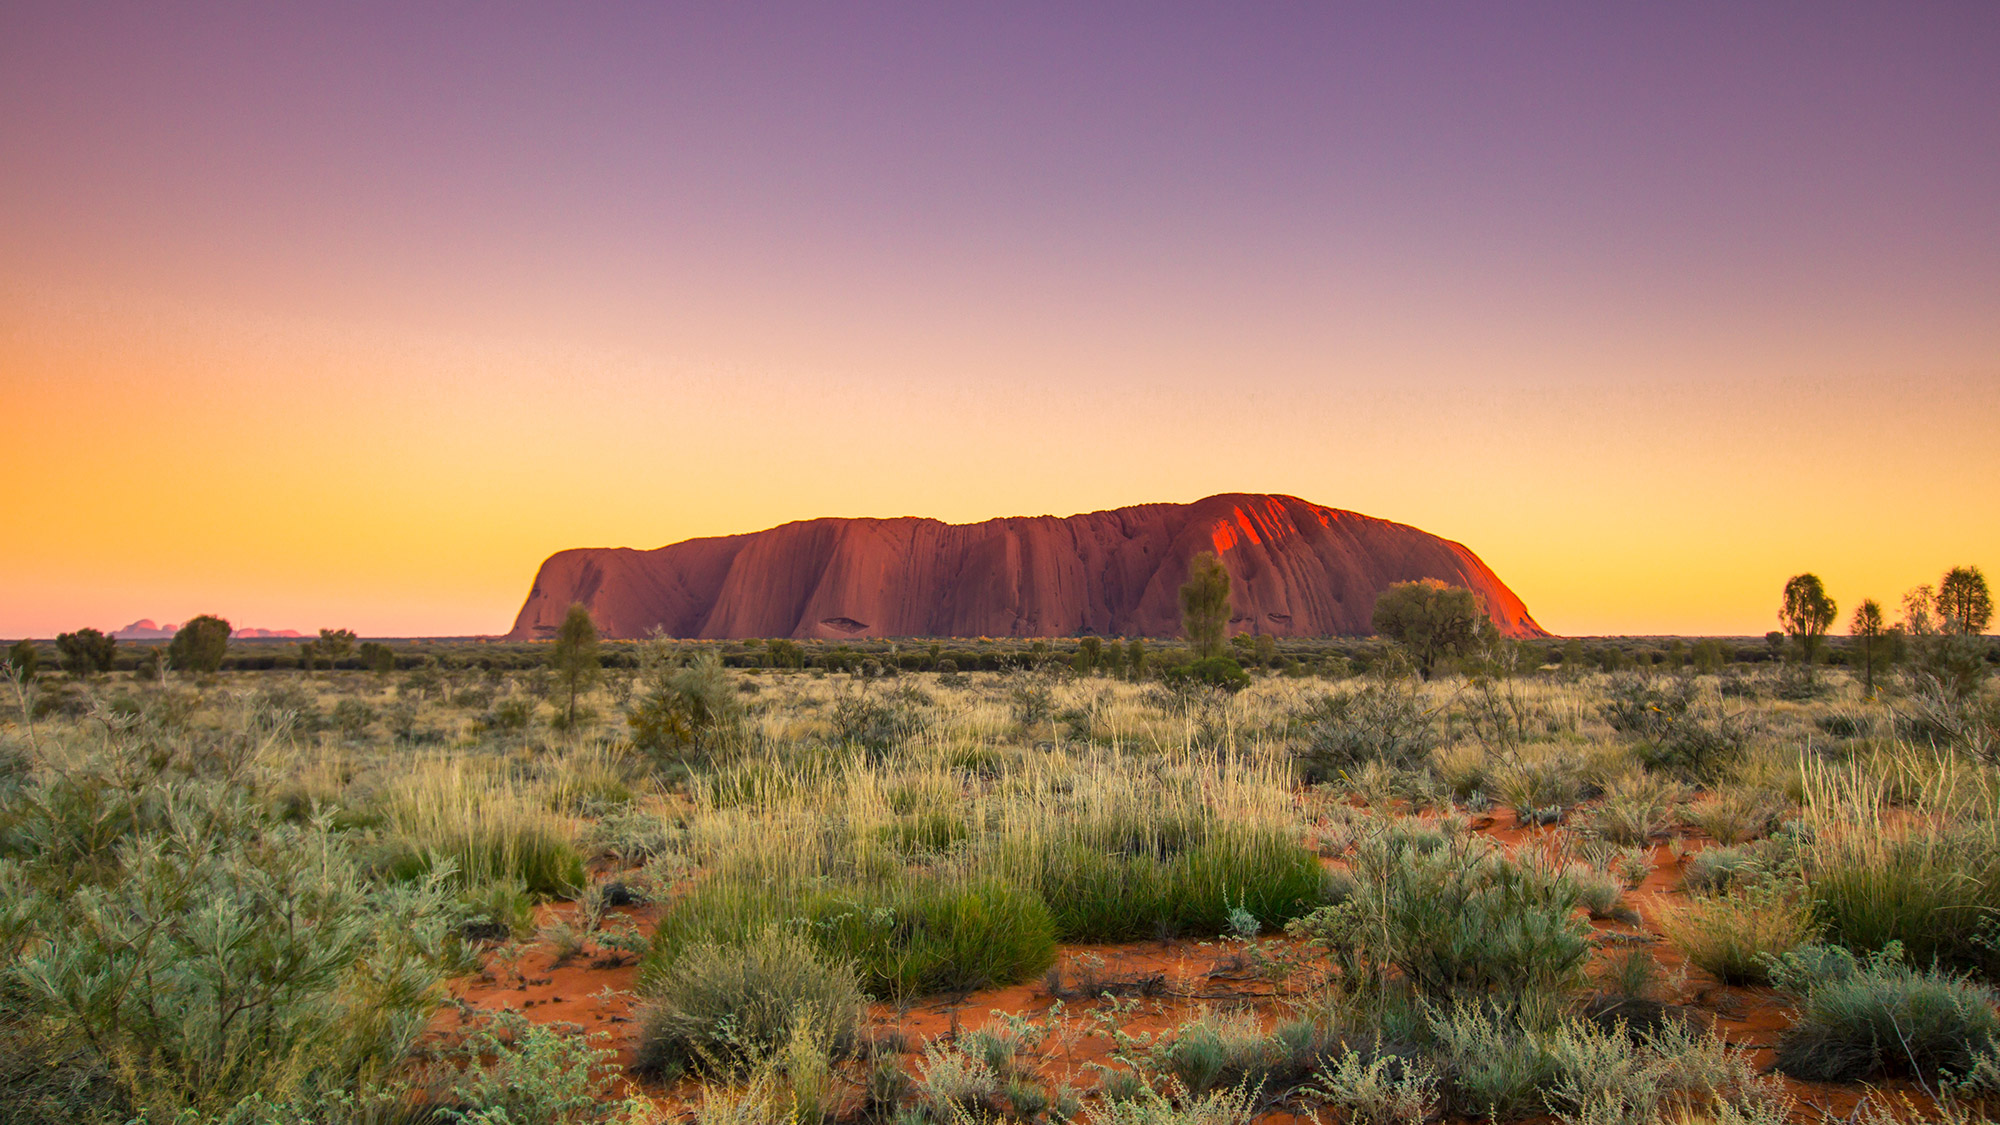 Exclusive Uluru Private Charter Weekend Getaway departing Canberra - NT Now